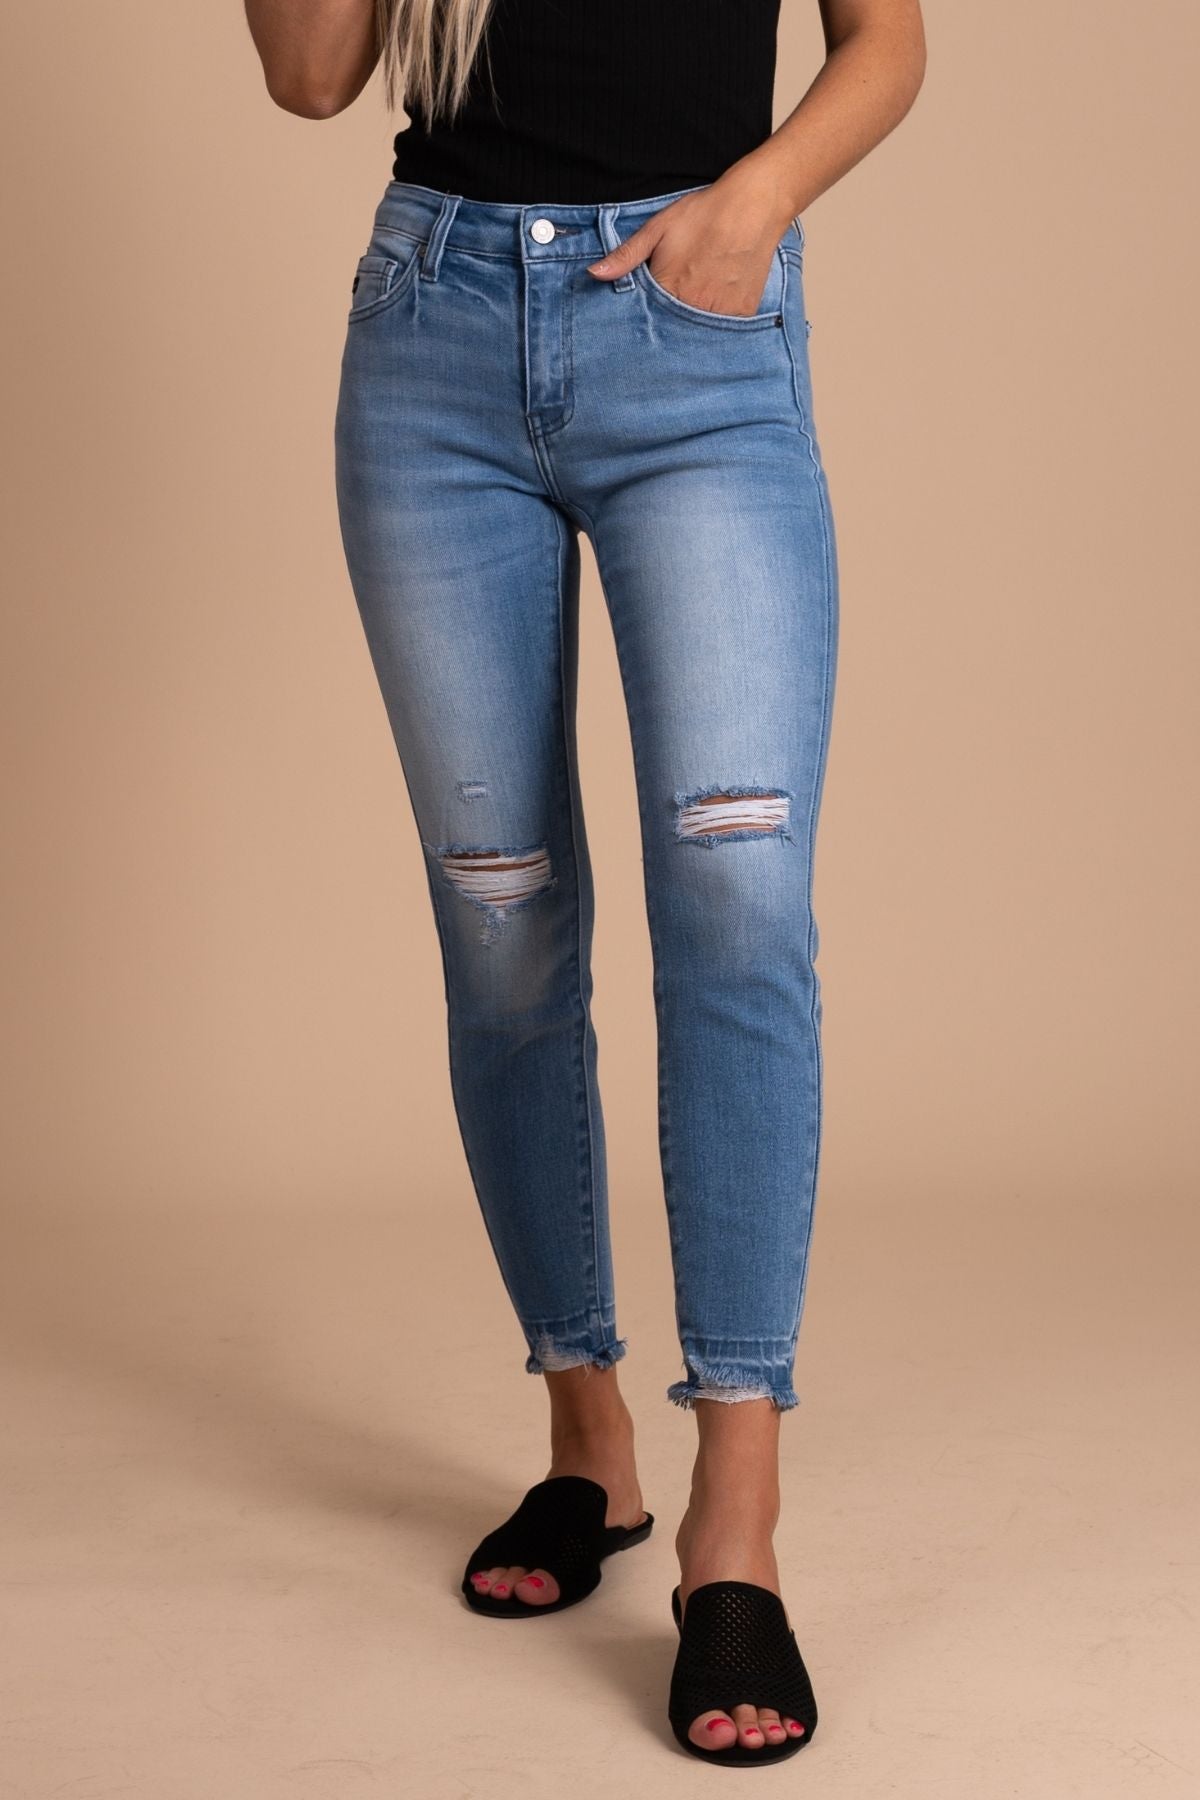 Blue KanCan Brand Boutique Jeans for Women